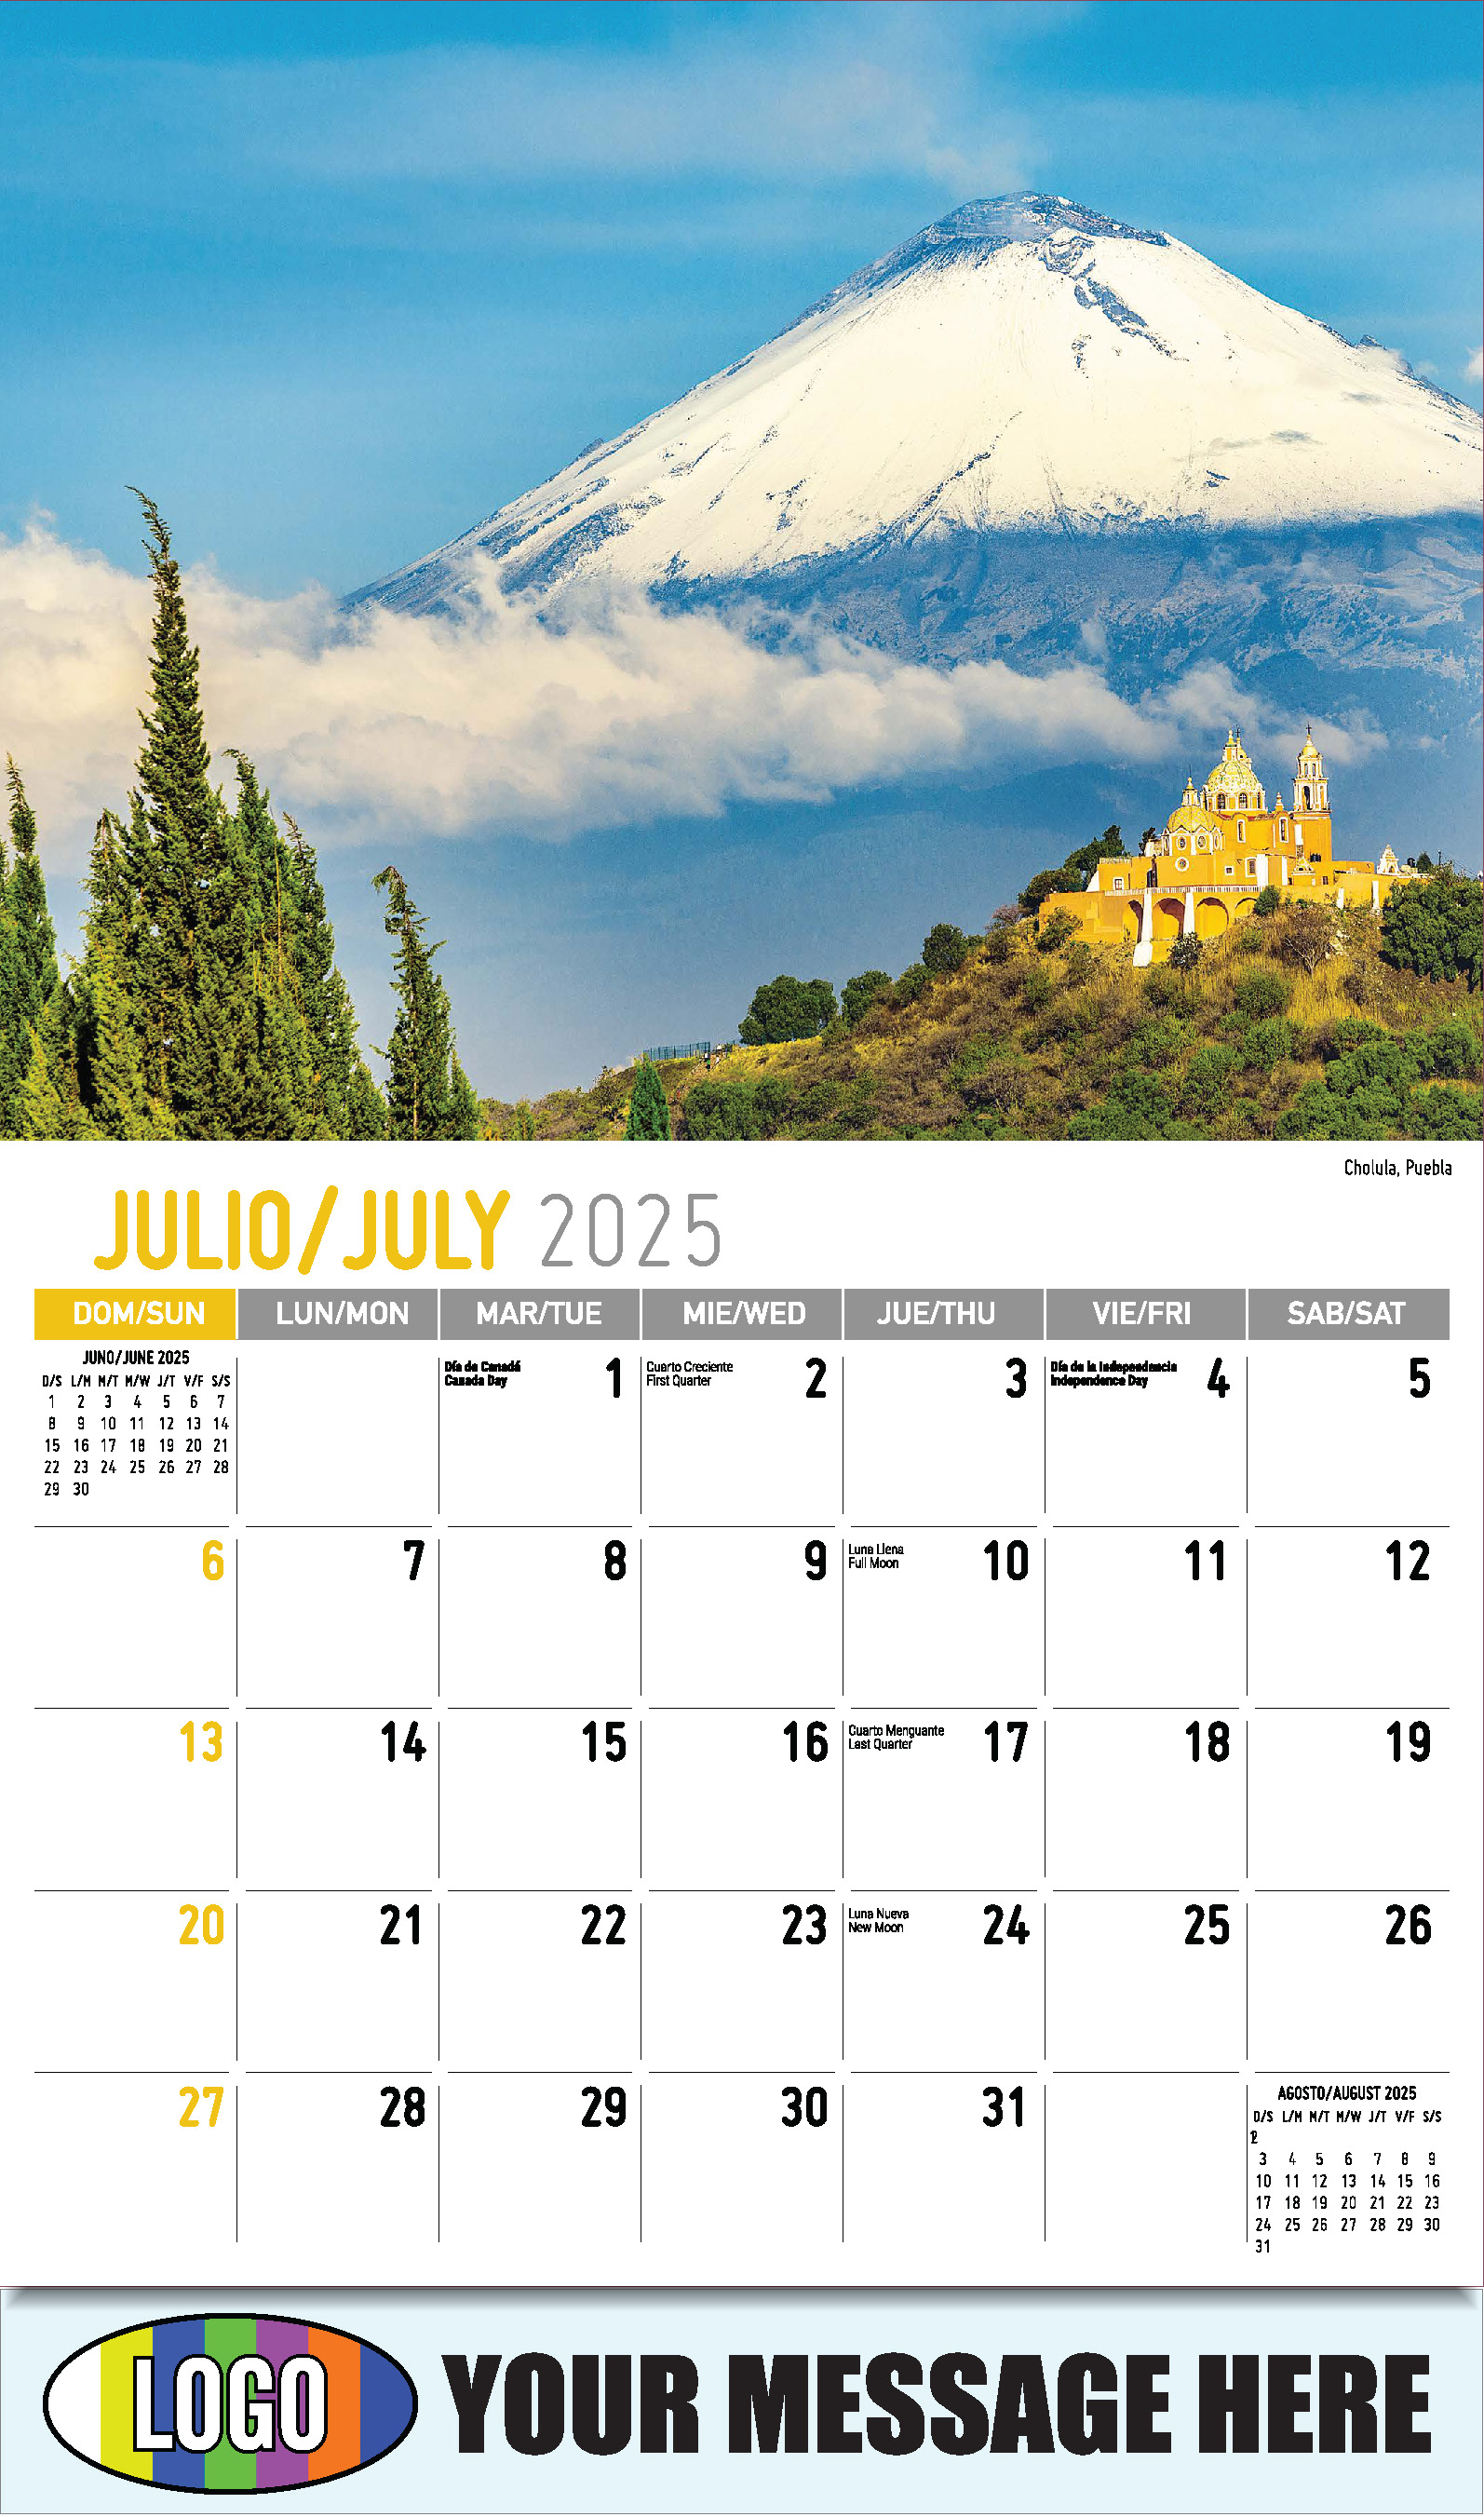 Scenes of Mexico 2025 Bilingual Business Promo Calendar - July